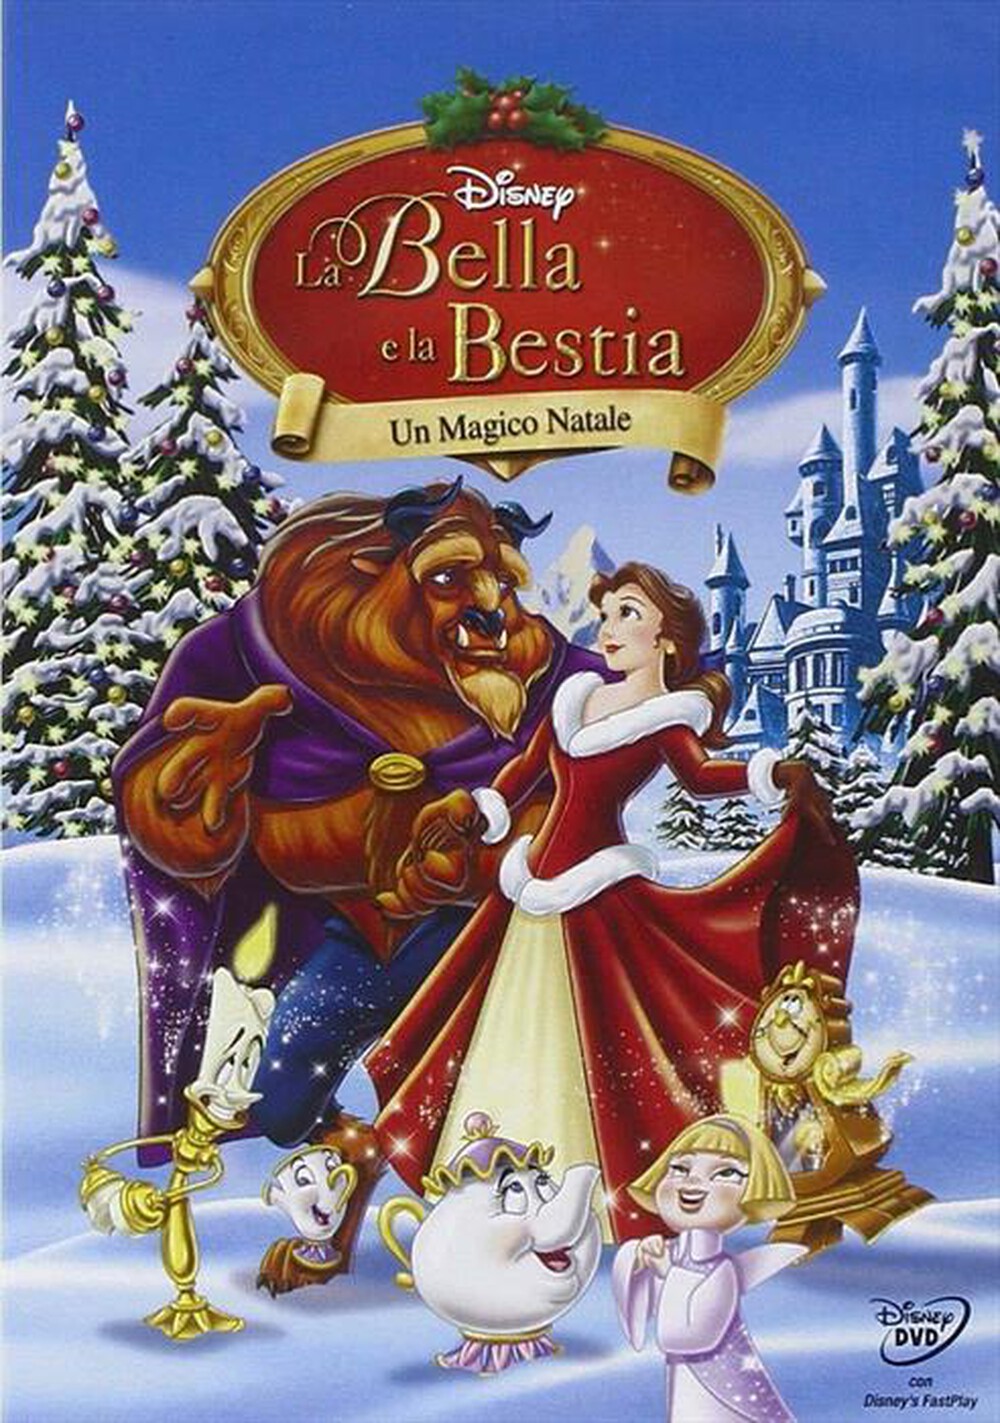 "WALT DISNEY - Bella E La Bestia (La) - Un Magico Natale - "